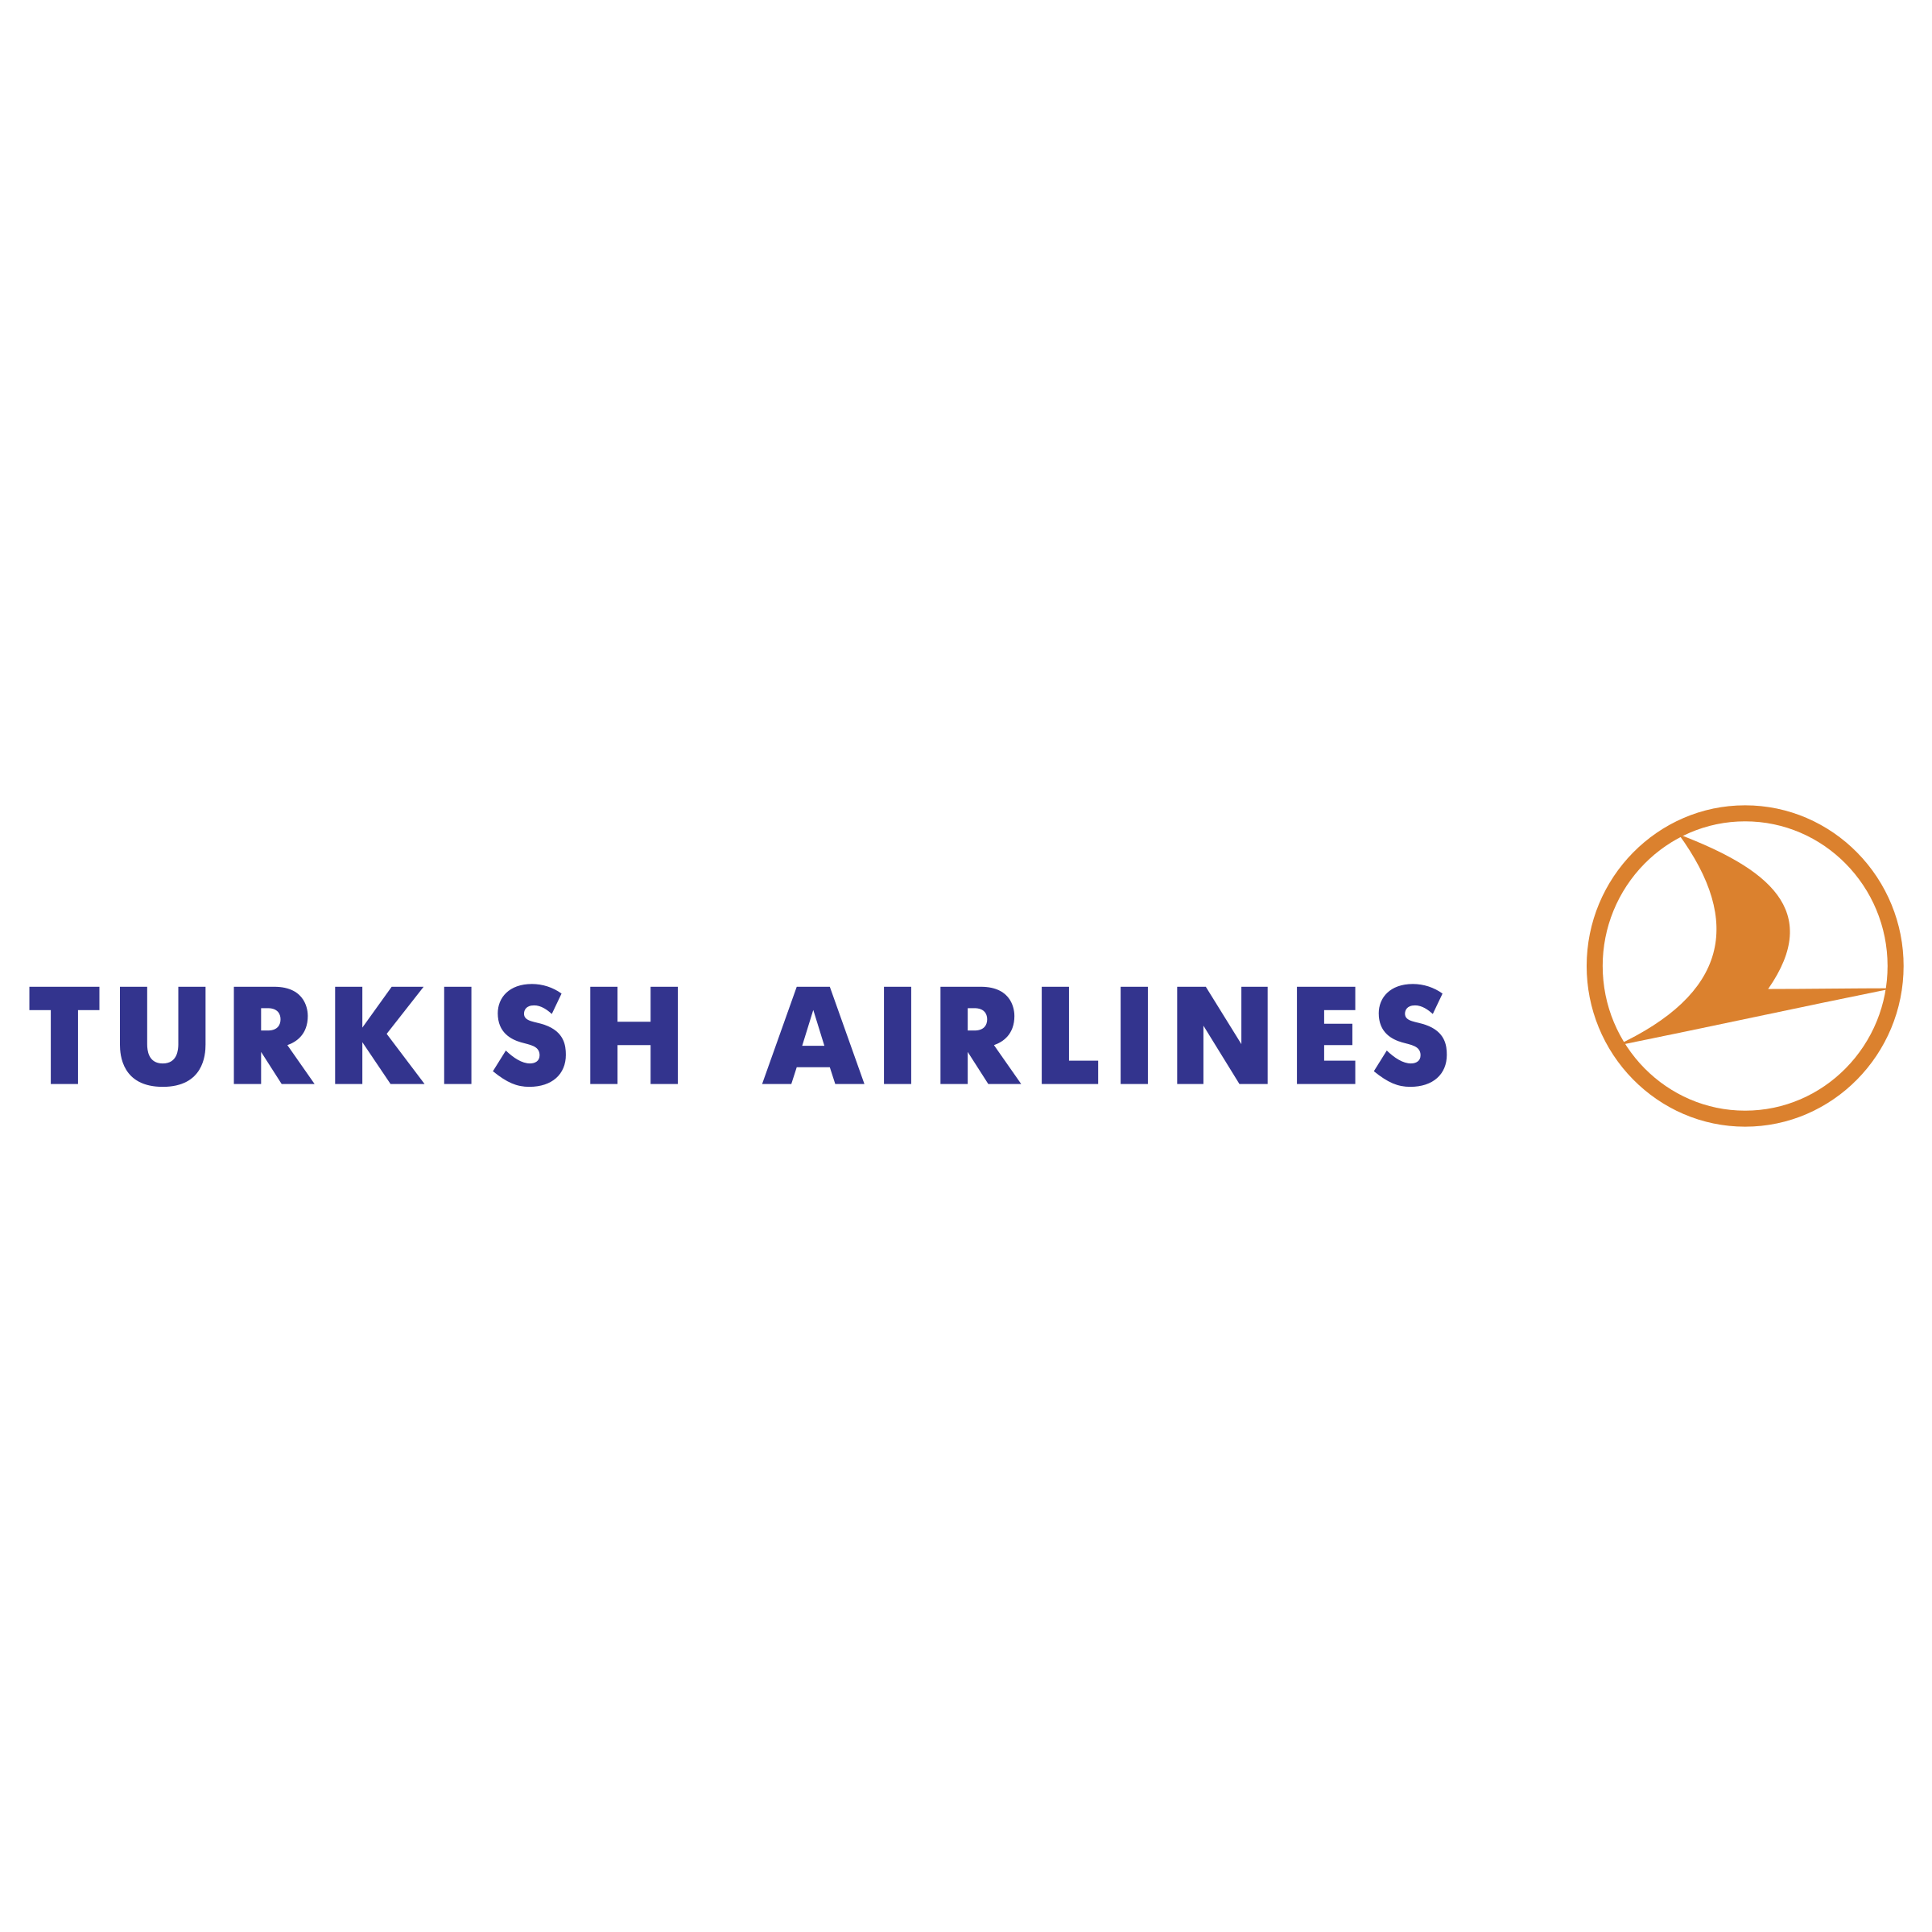 Turkish Airlines Logo - Turkish Airlines Logo PNG Transparent & SVG Vector - Freebie Supply